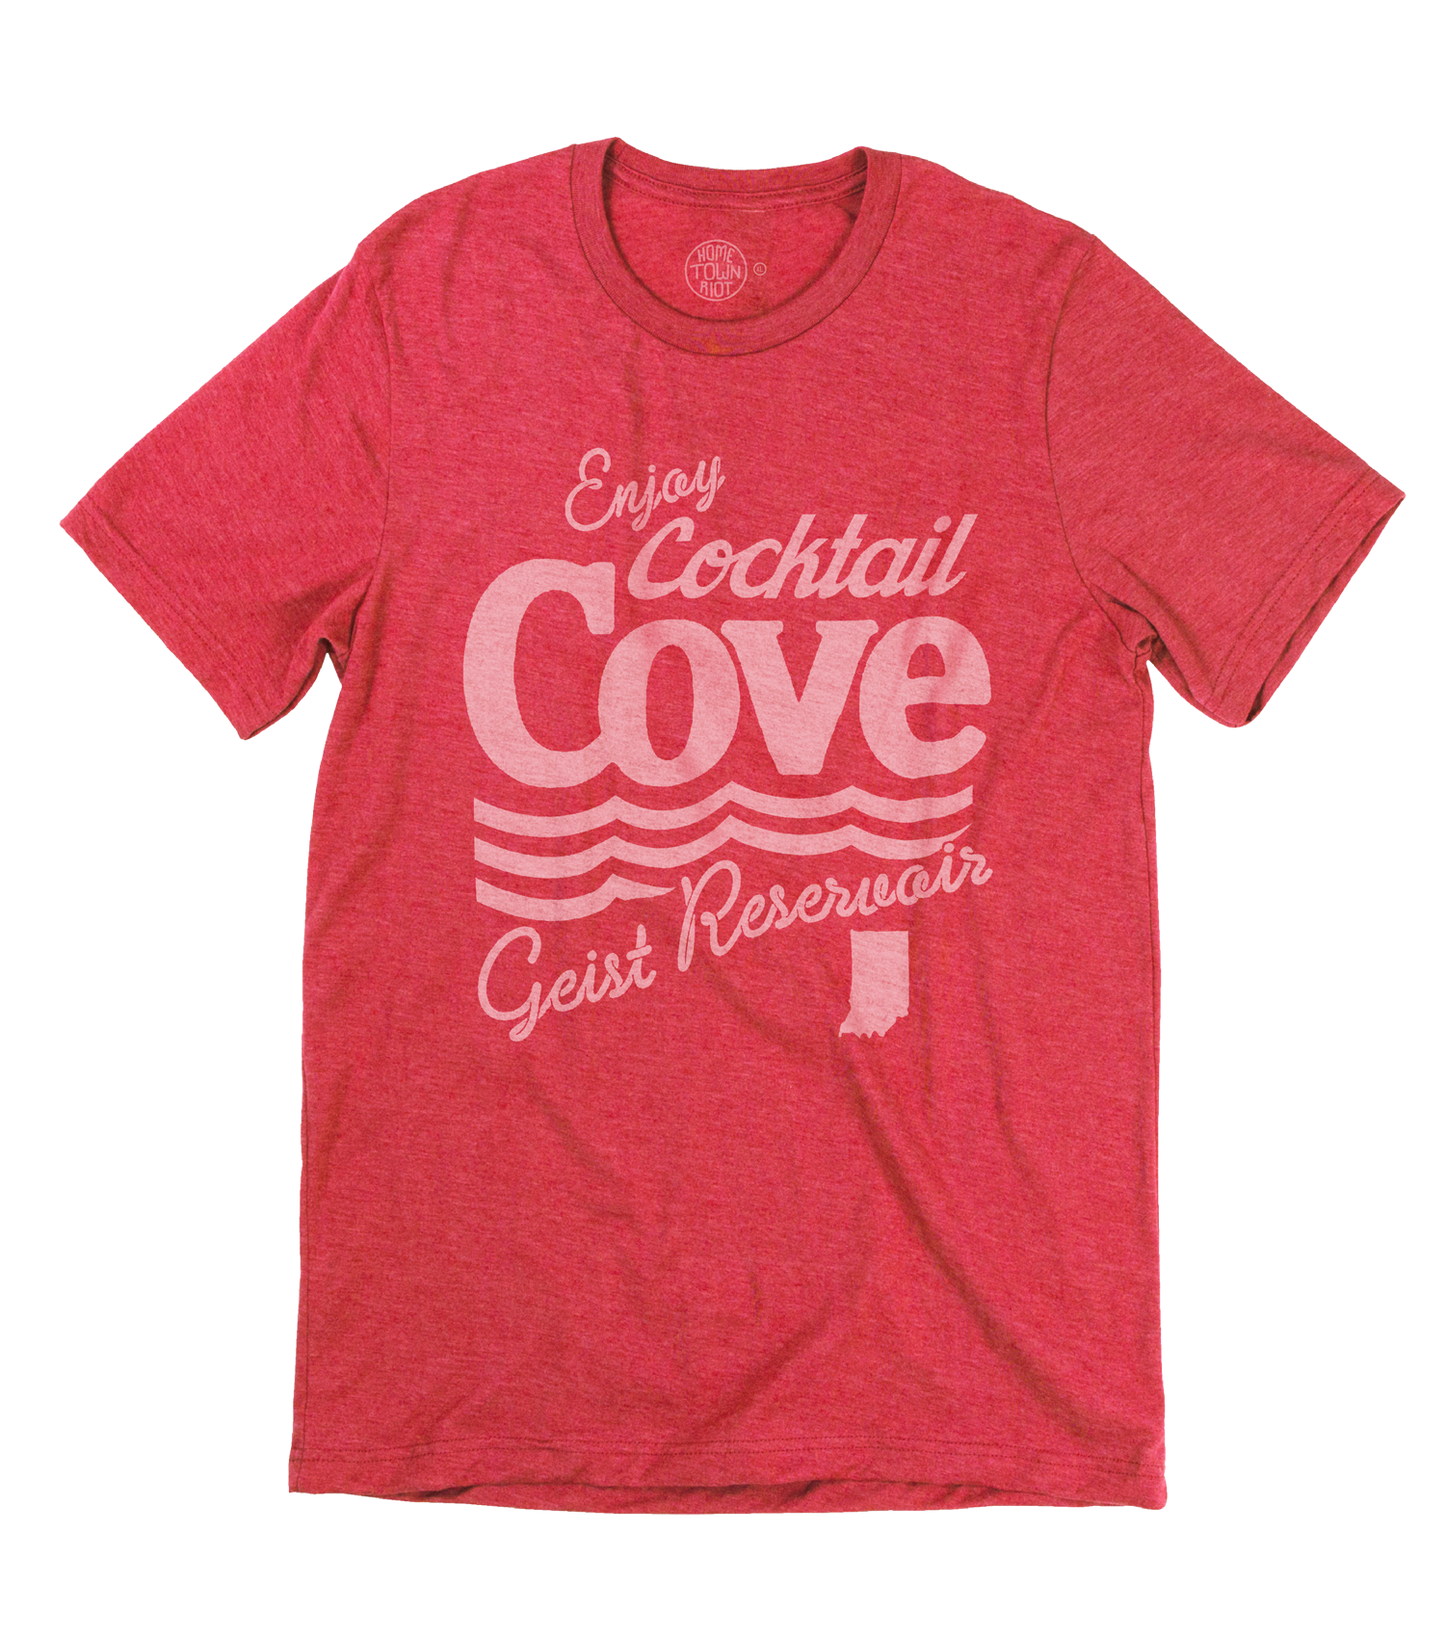 Cocktail Cove Geist Reservoir Shirt - HomeTownRiot